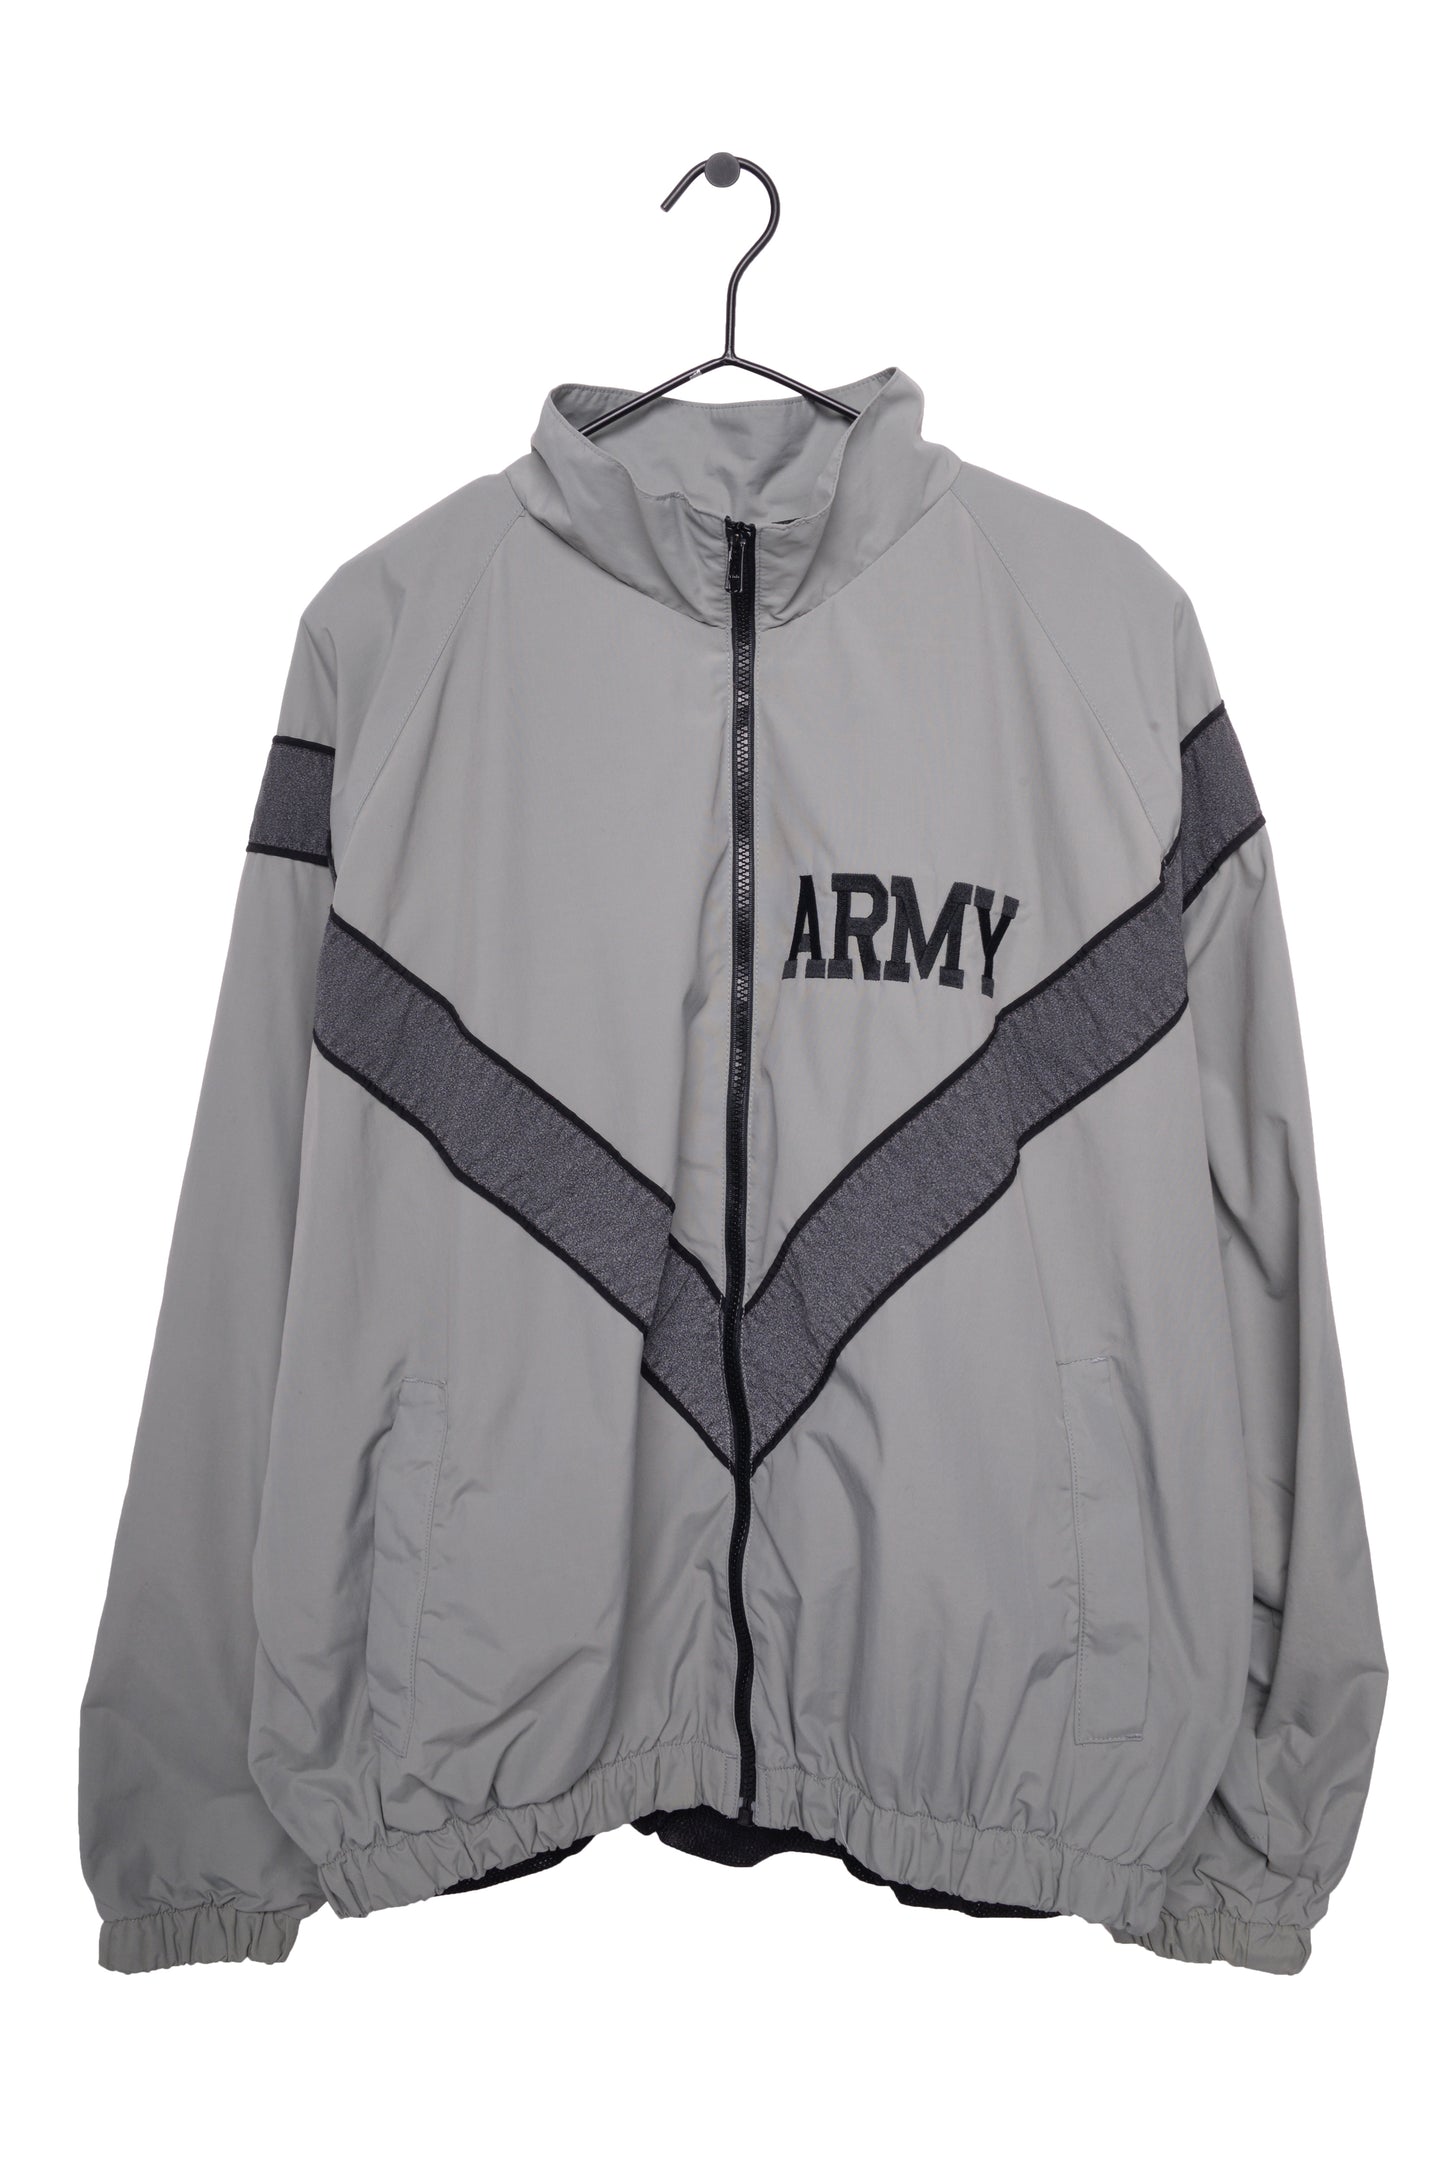 US Army Windbreaker Jacket